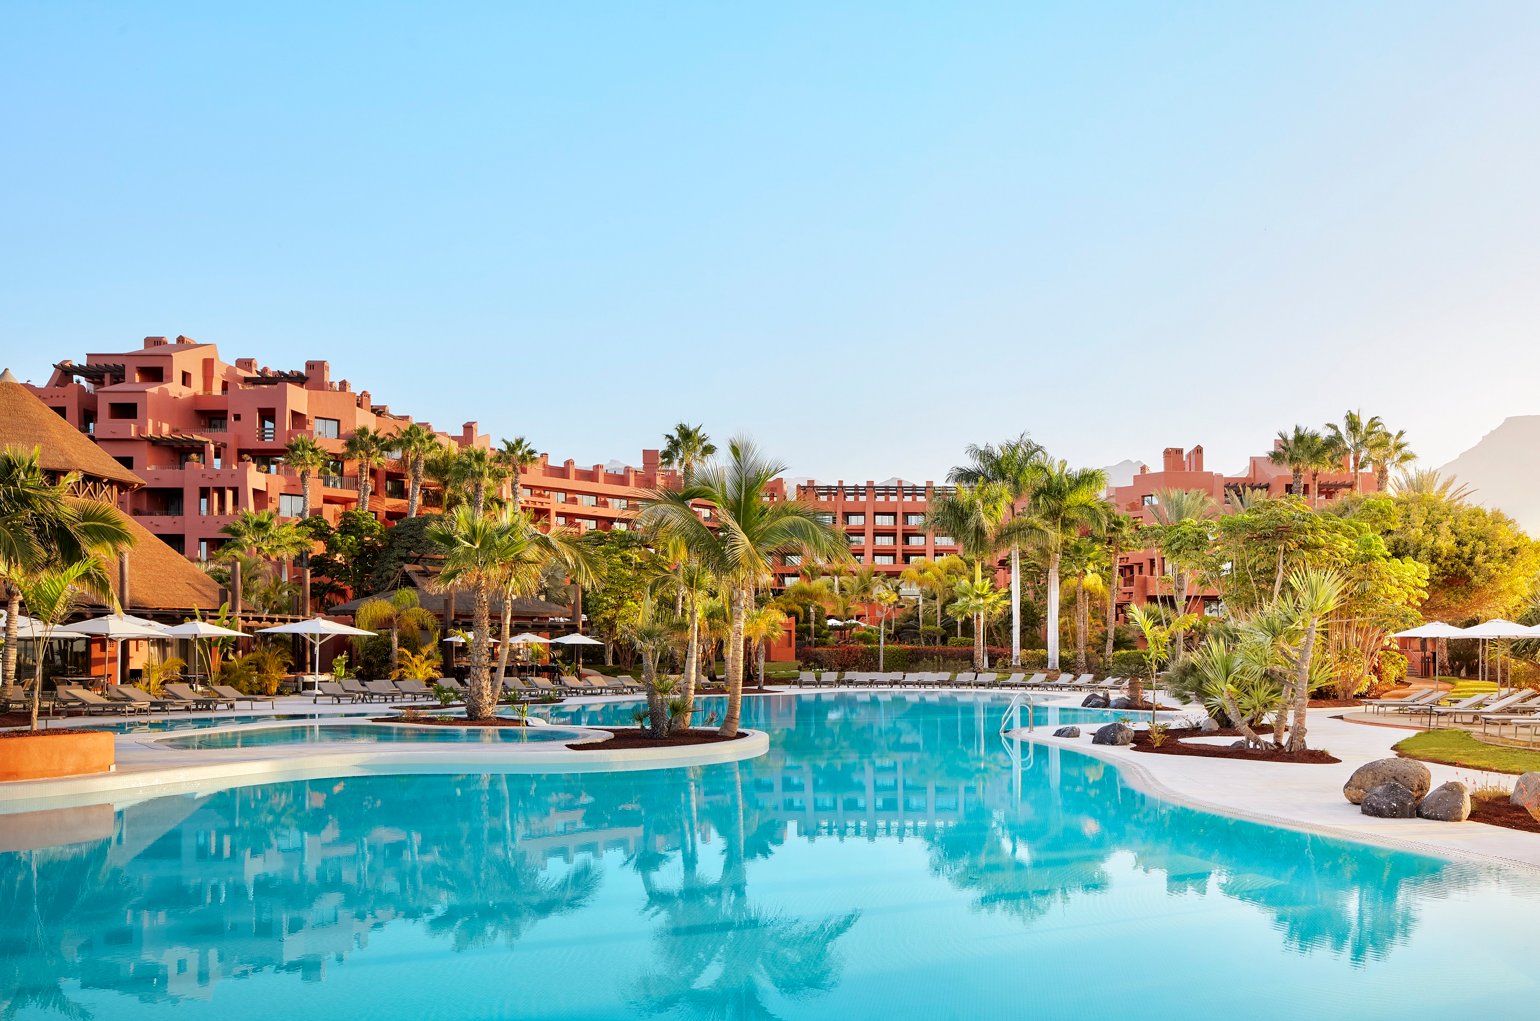 Tivoli Hotels debuts in Spain with Tivoli La Caleta in Tenerife